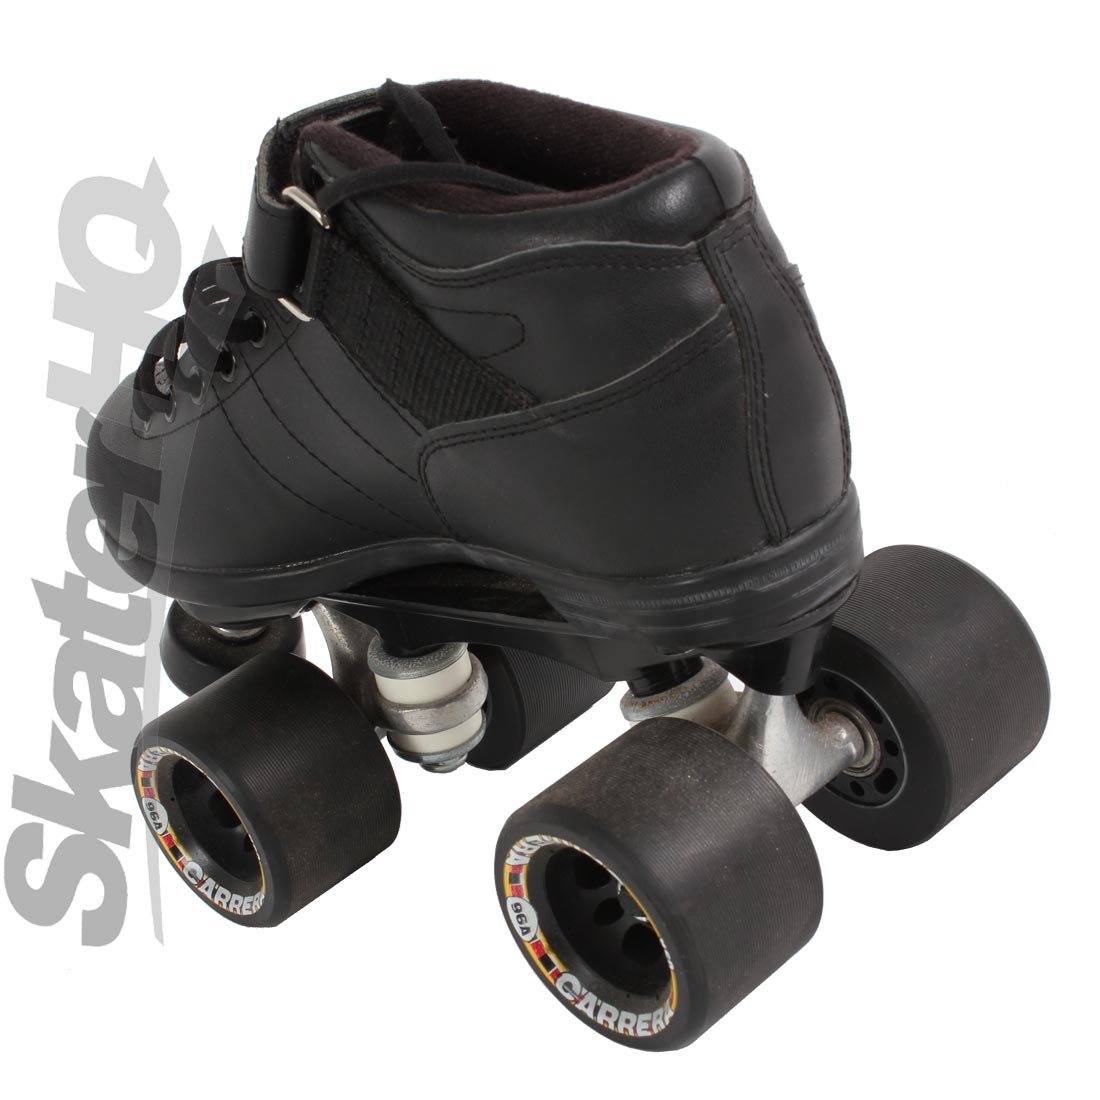 Sure-Grip Carrera 7US/ EU39 - Blk - sale - last pair - Skater HQ